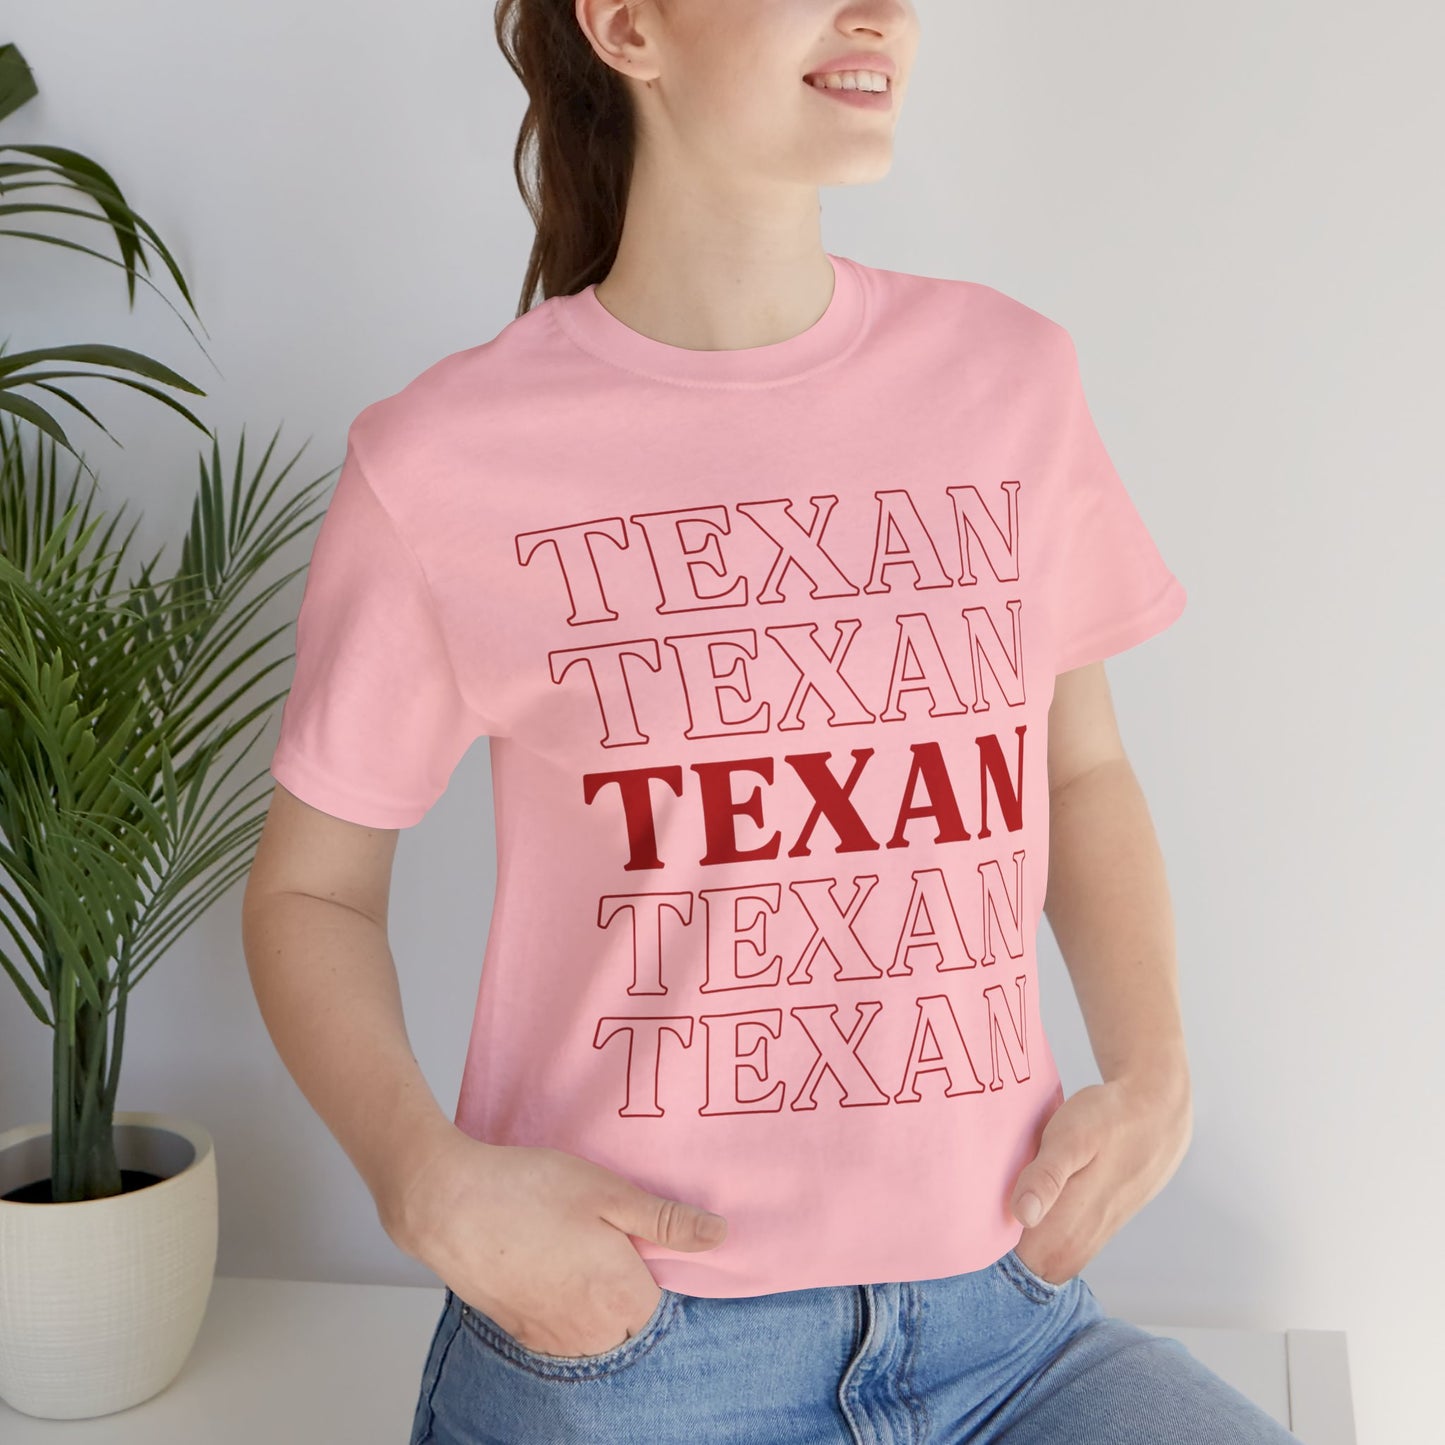 Texan Unisex Tee